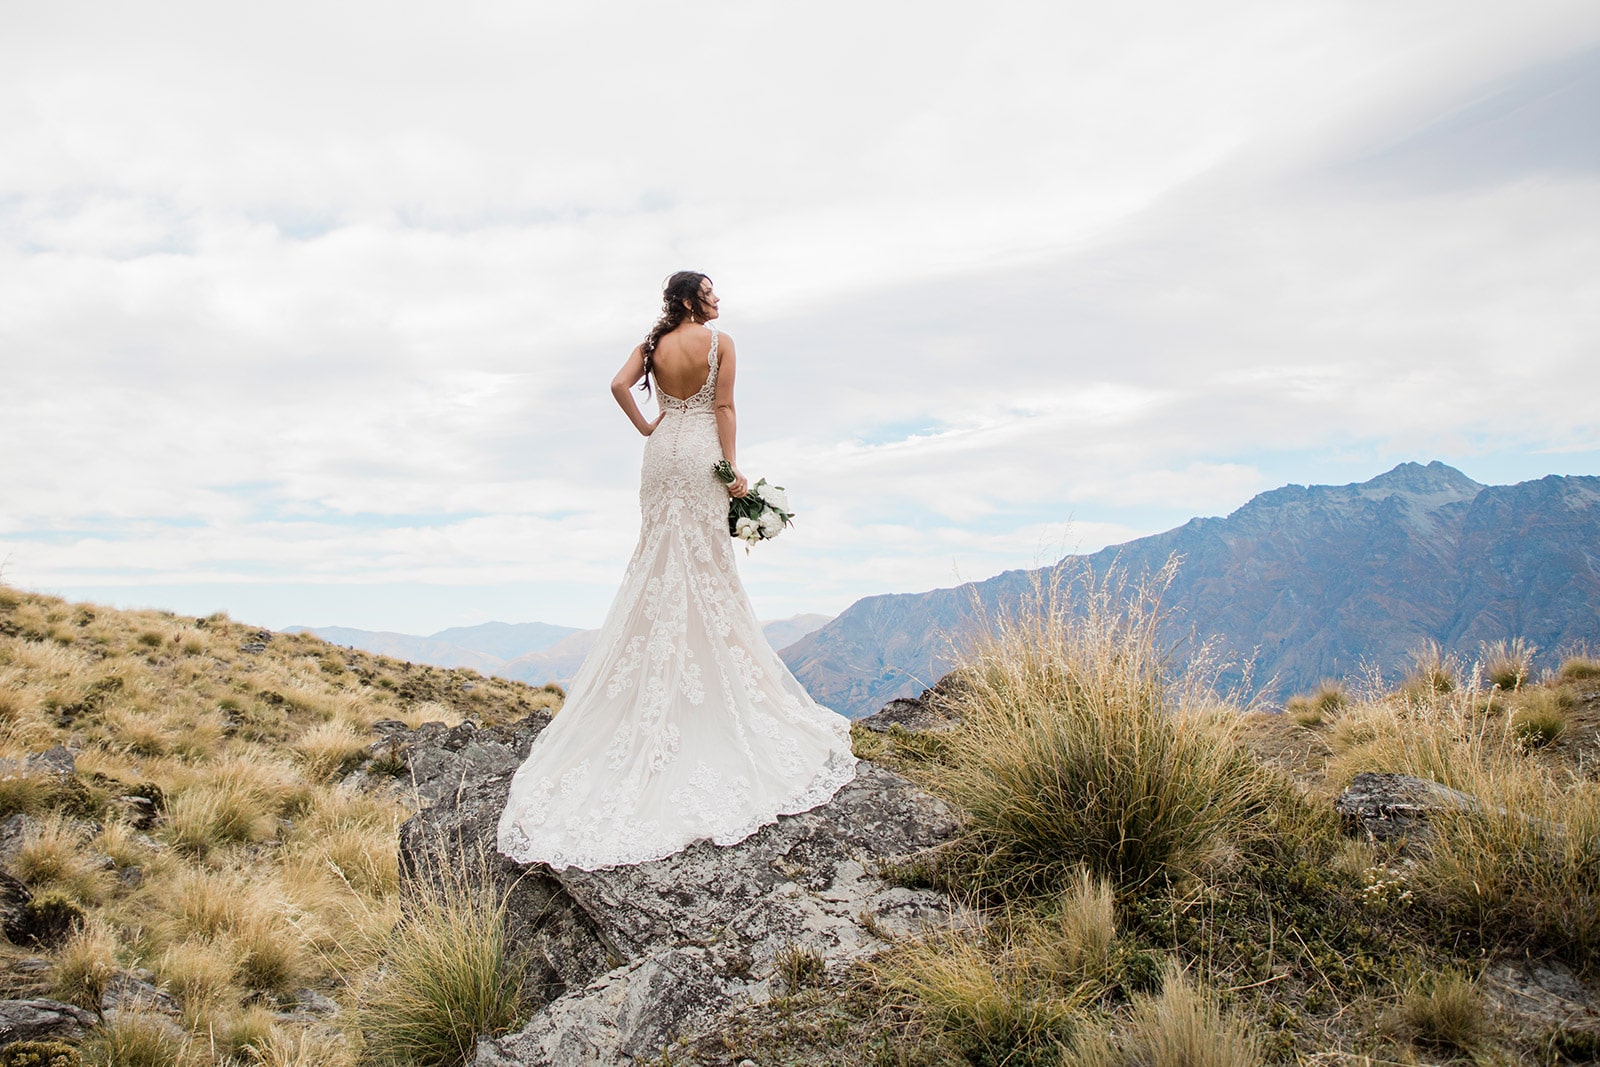 Heli Wedding in Queenstown New Zealand with American couple